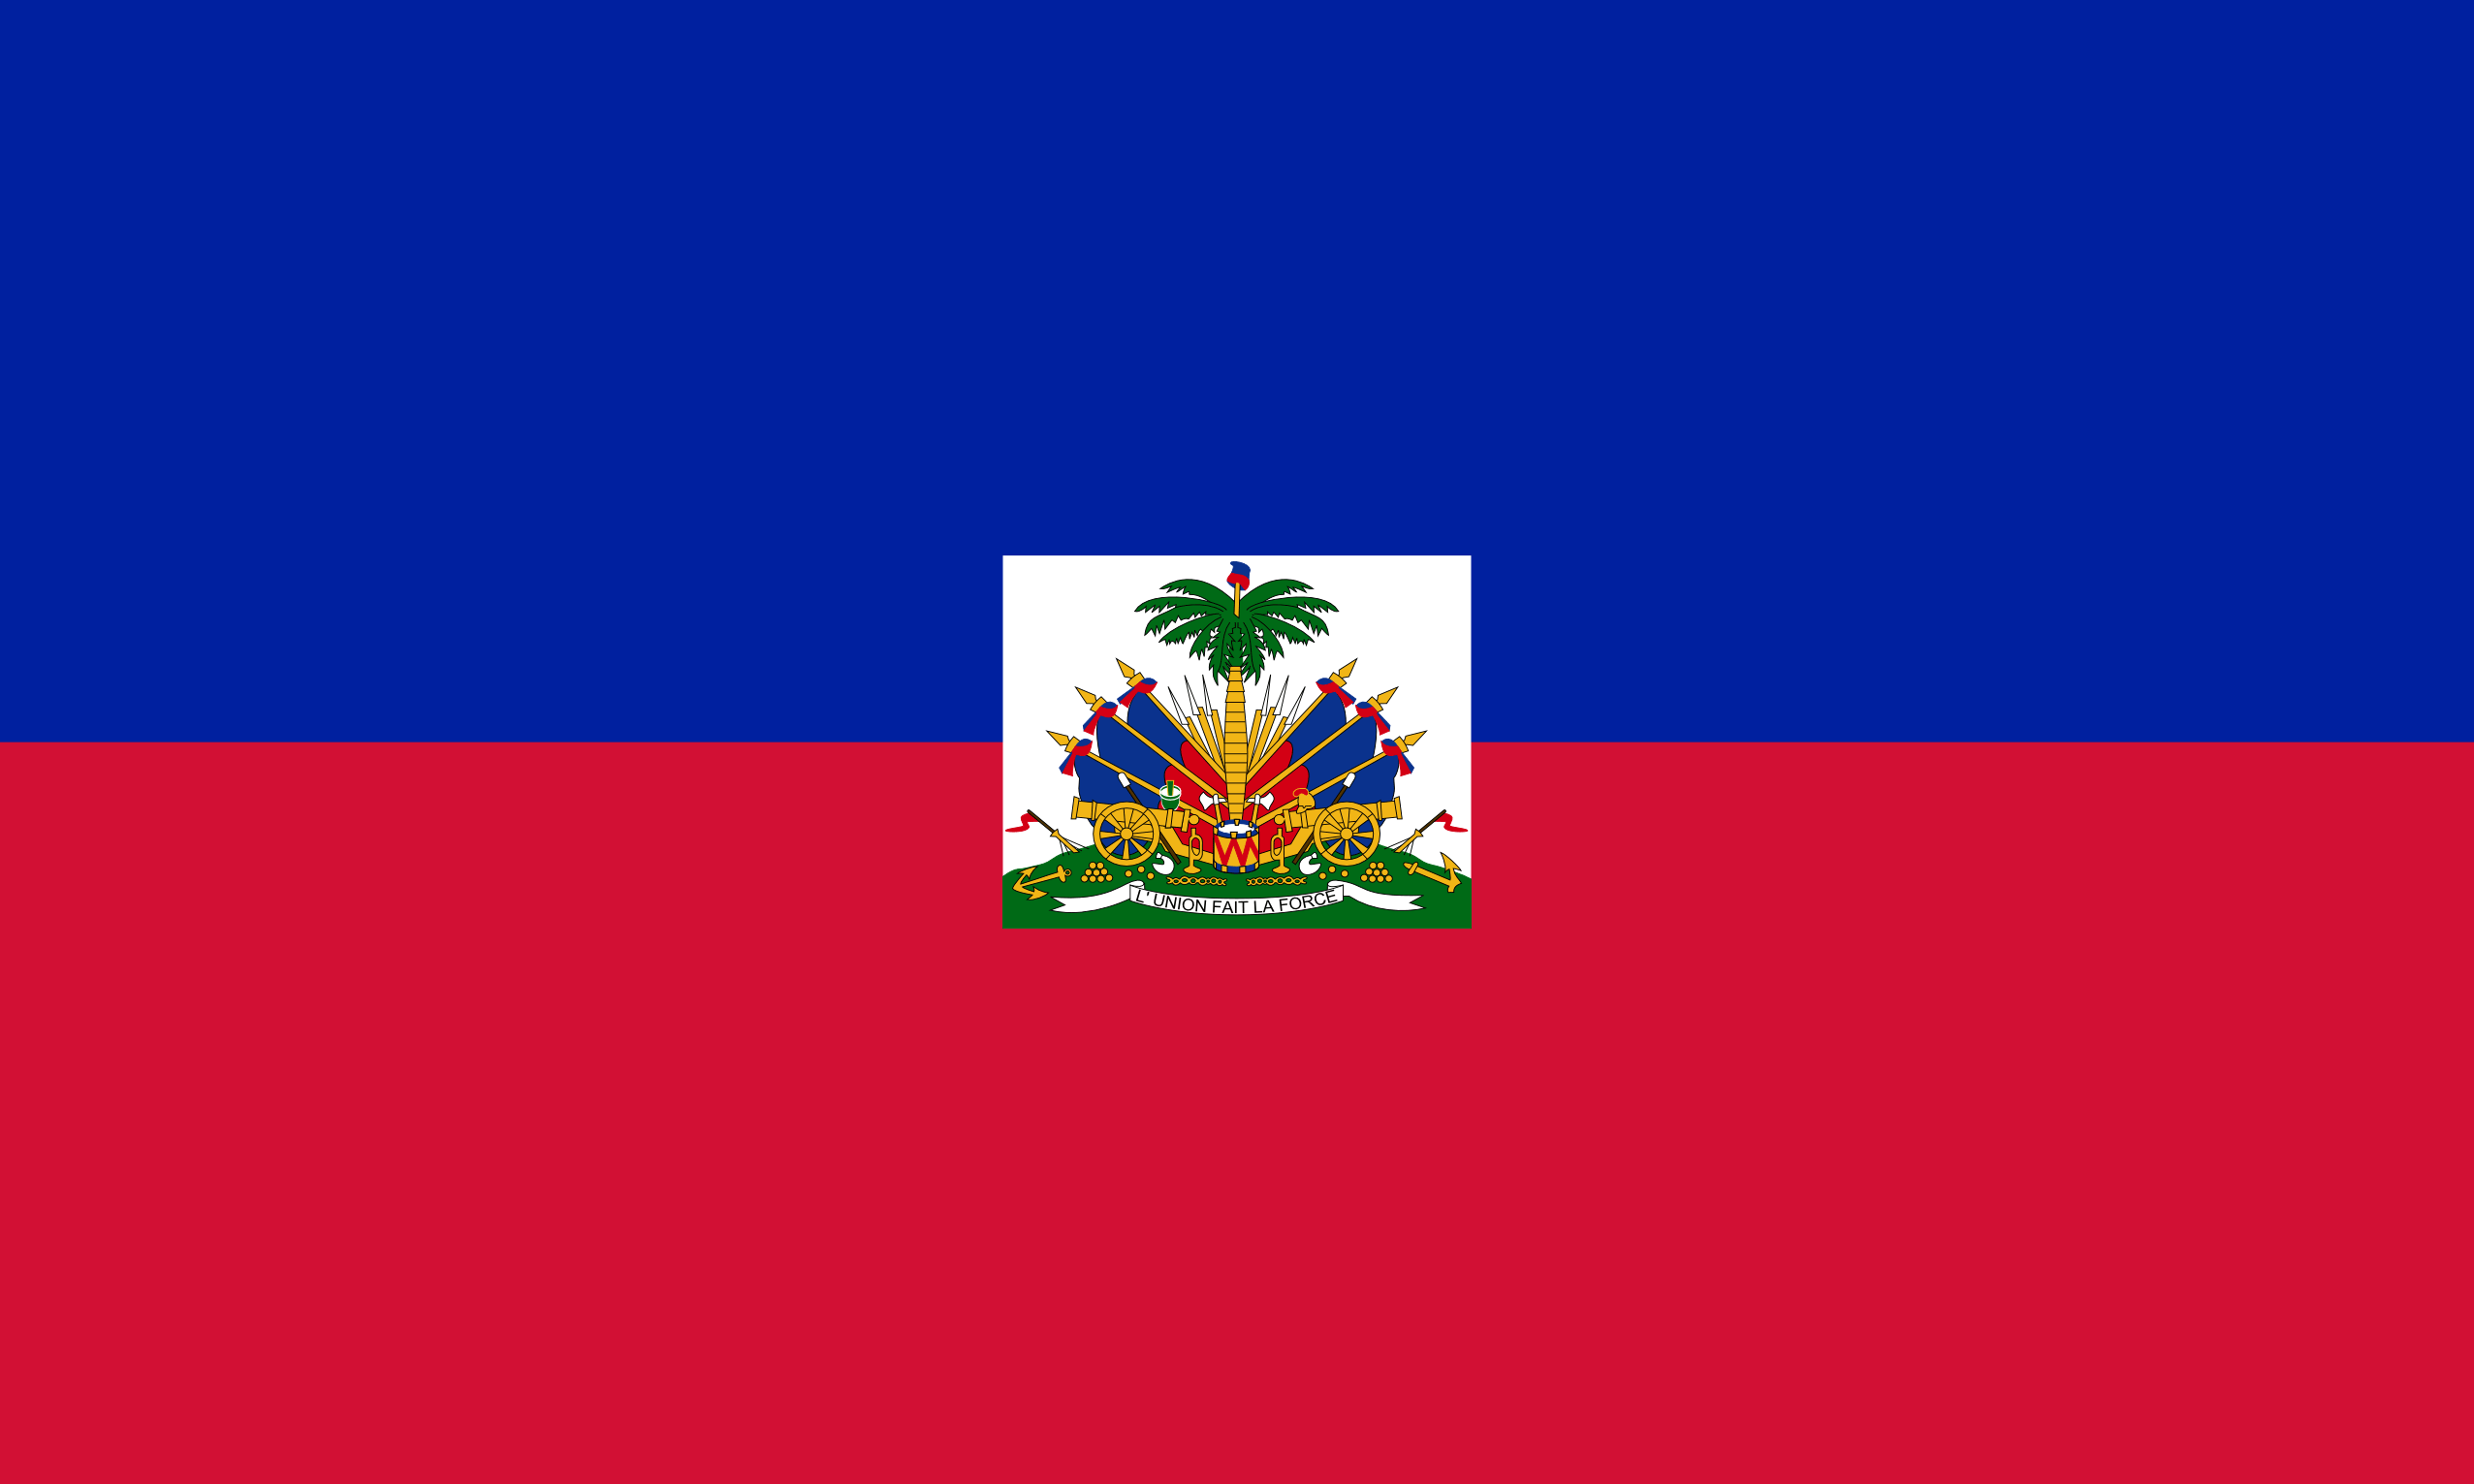 la imagen muestra la bandera de haiti